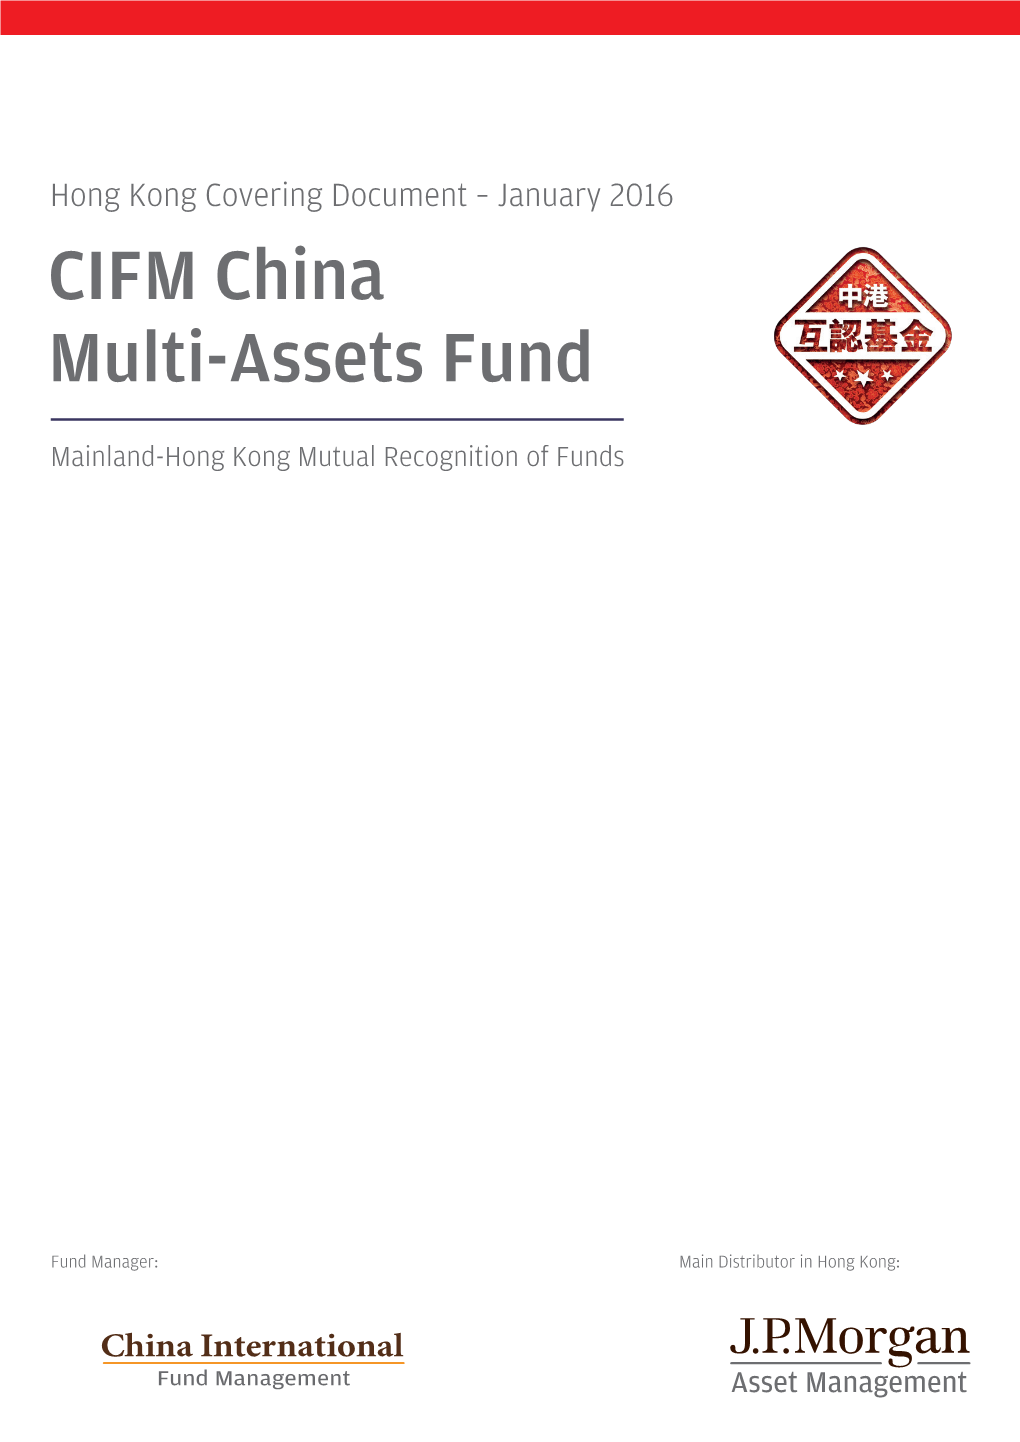 CIFM China Multi-Assets Fund